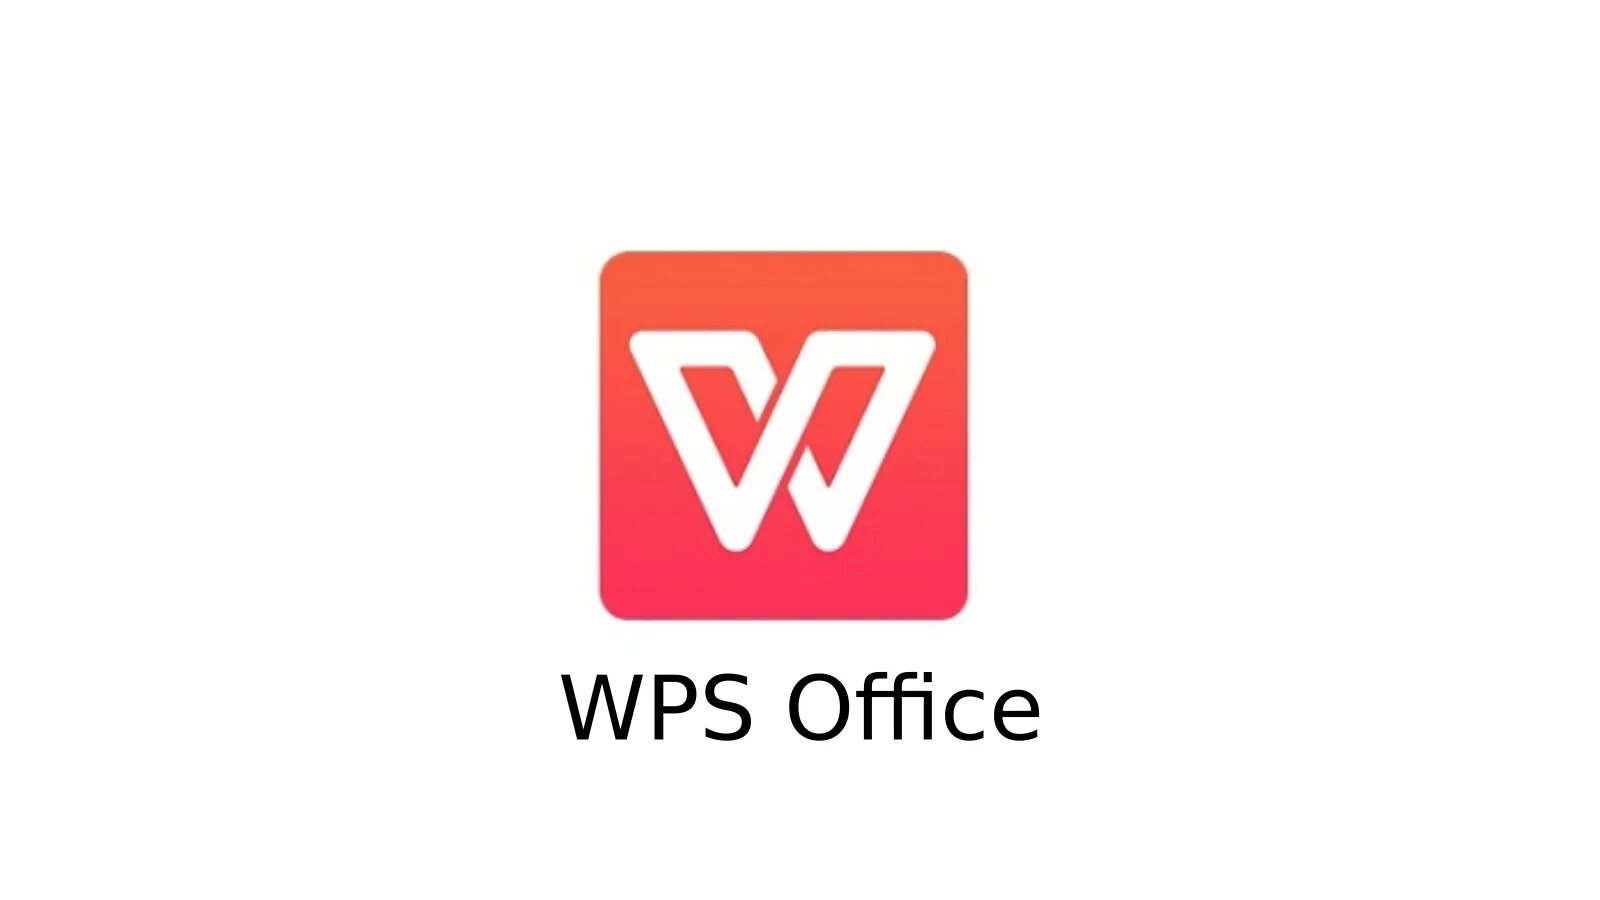 WPS Office. WPS офис. Значок WPS. Программа WPS Office.